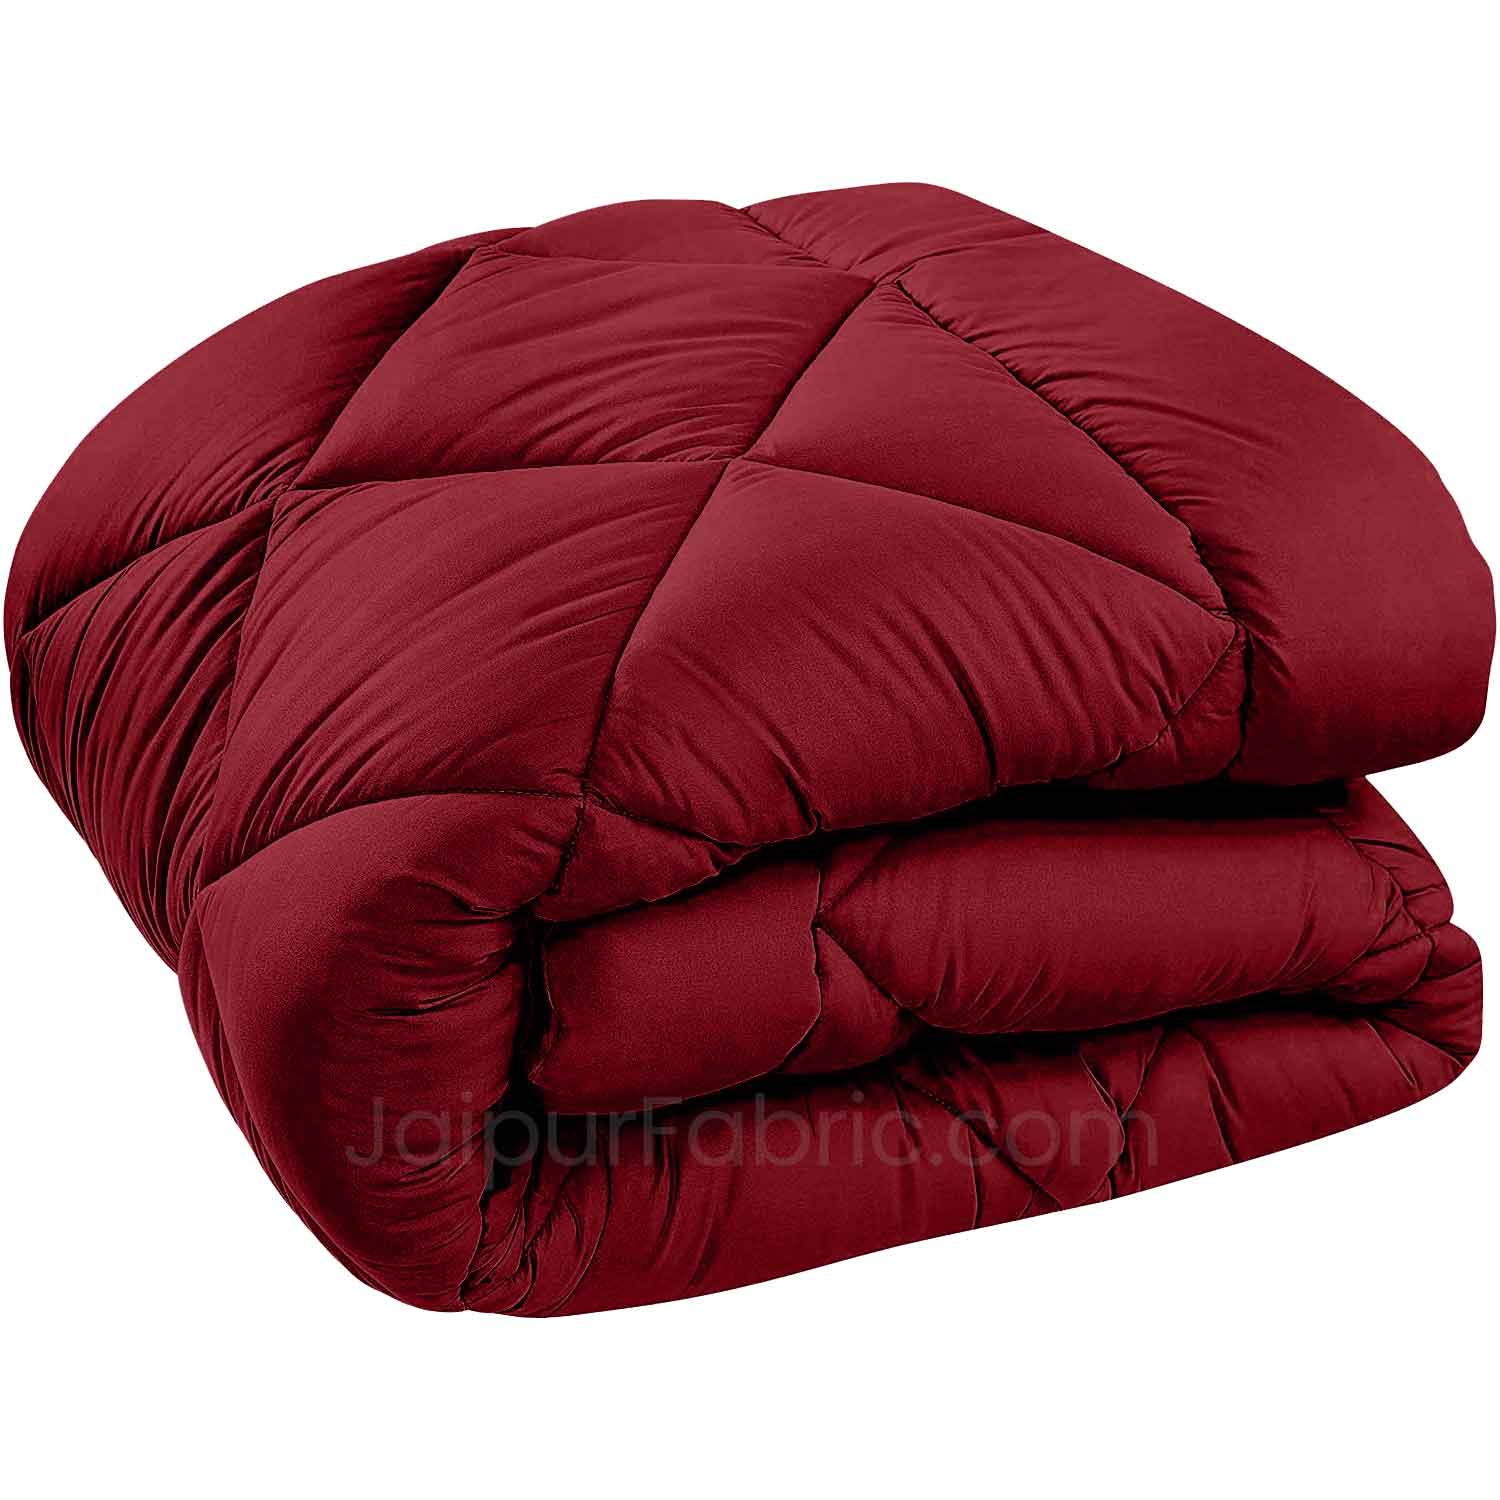 Maroon - Pink Single Bed Comforter